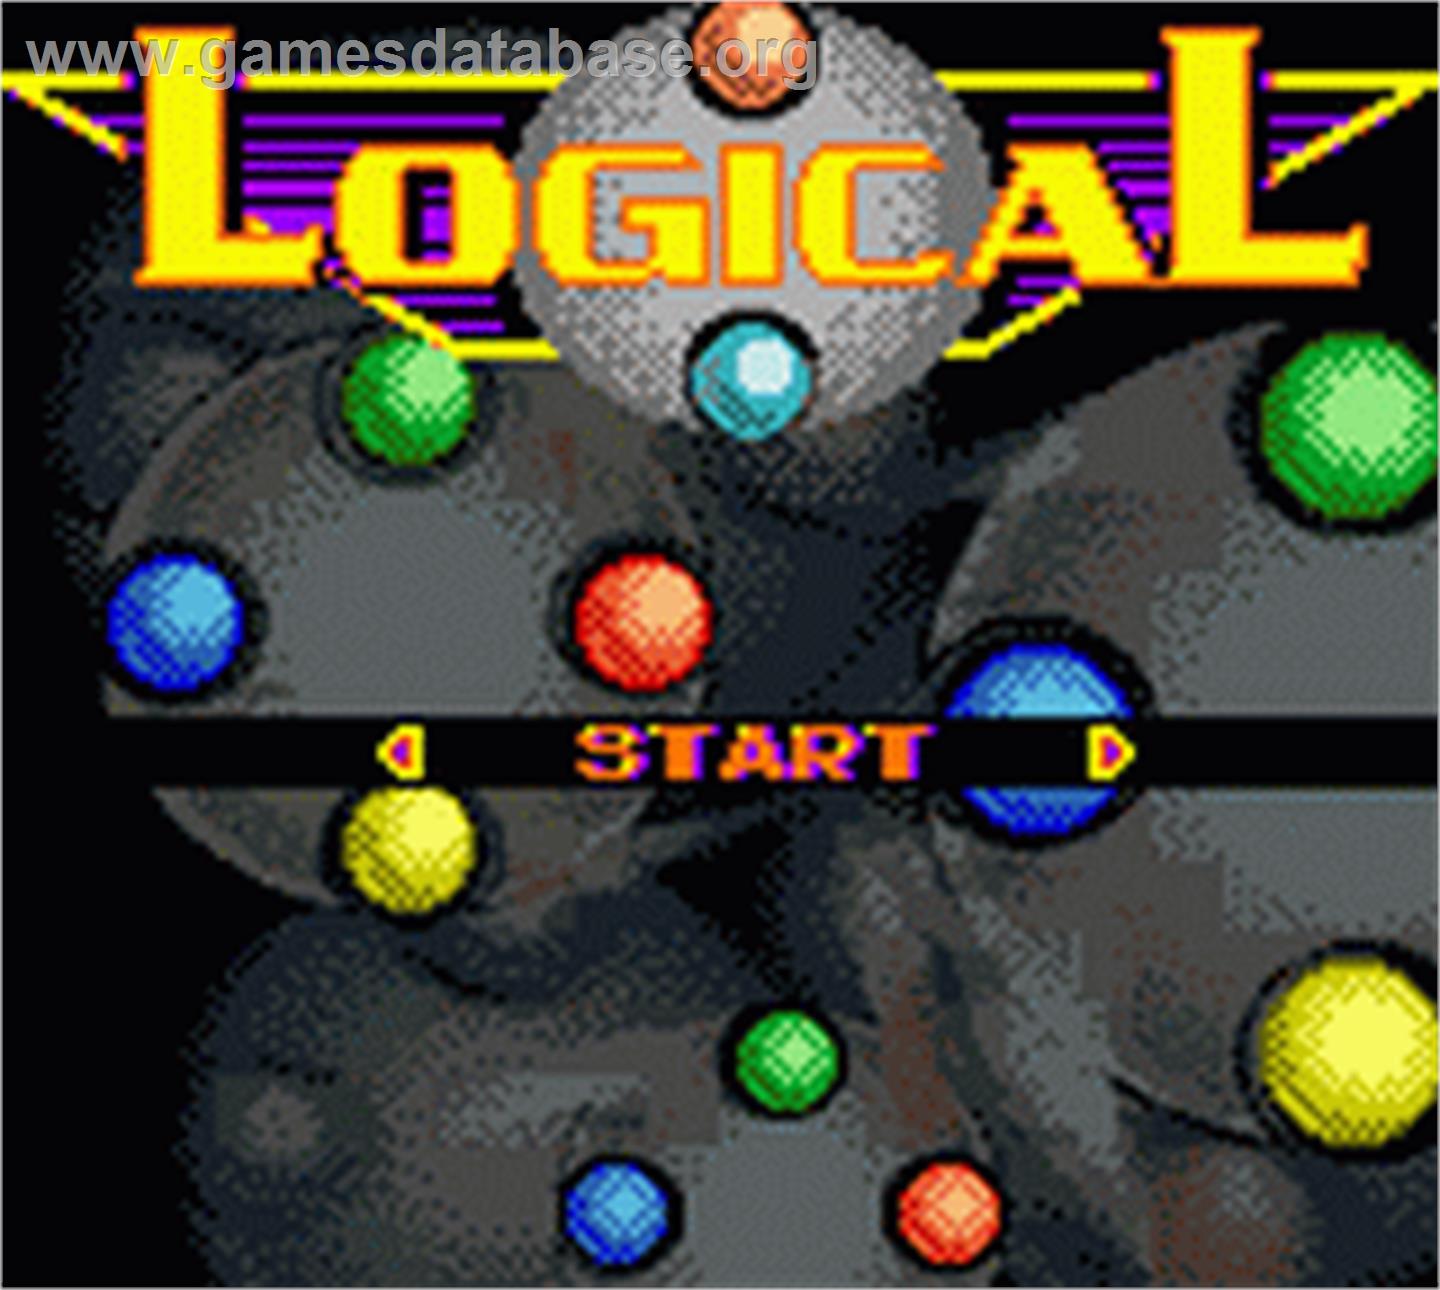 Logical - Nintendo Game Boy Color - Artwork - Title Screen